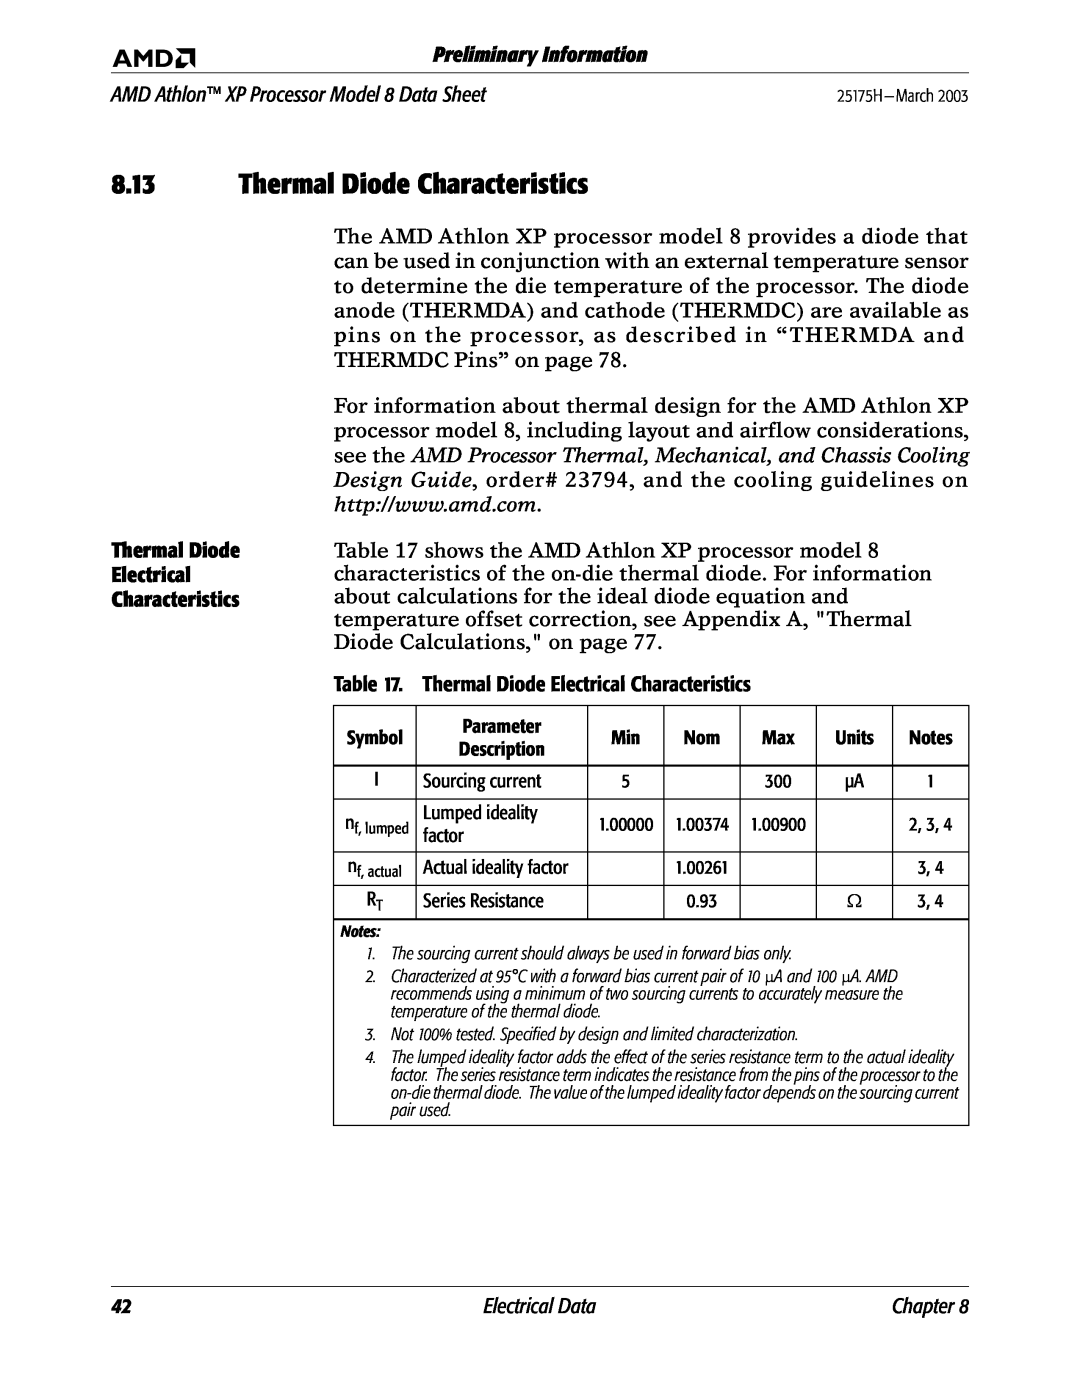 AMD Thermal Diode Characteristics, Preliminary Information, AMD Athlon XP Processor Model 8 Data Sheet, Electrical Data 